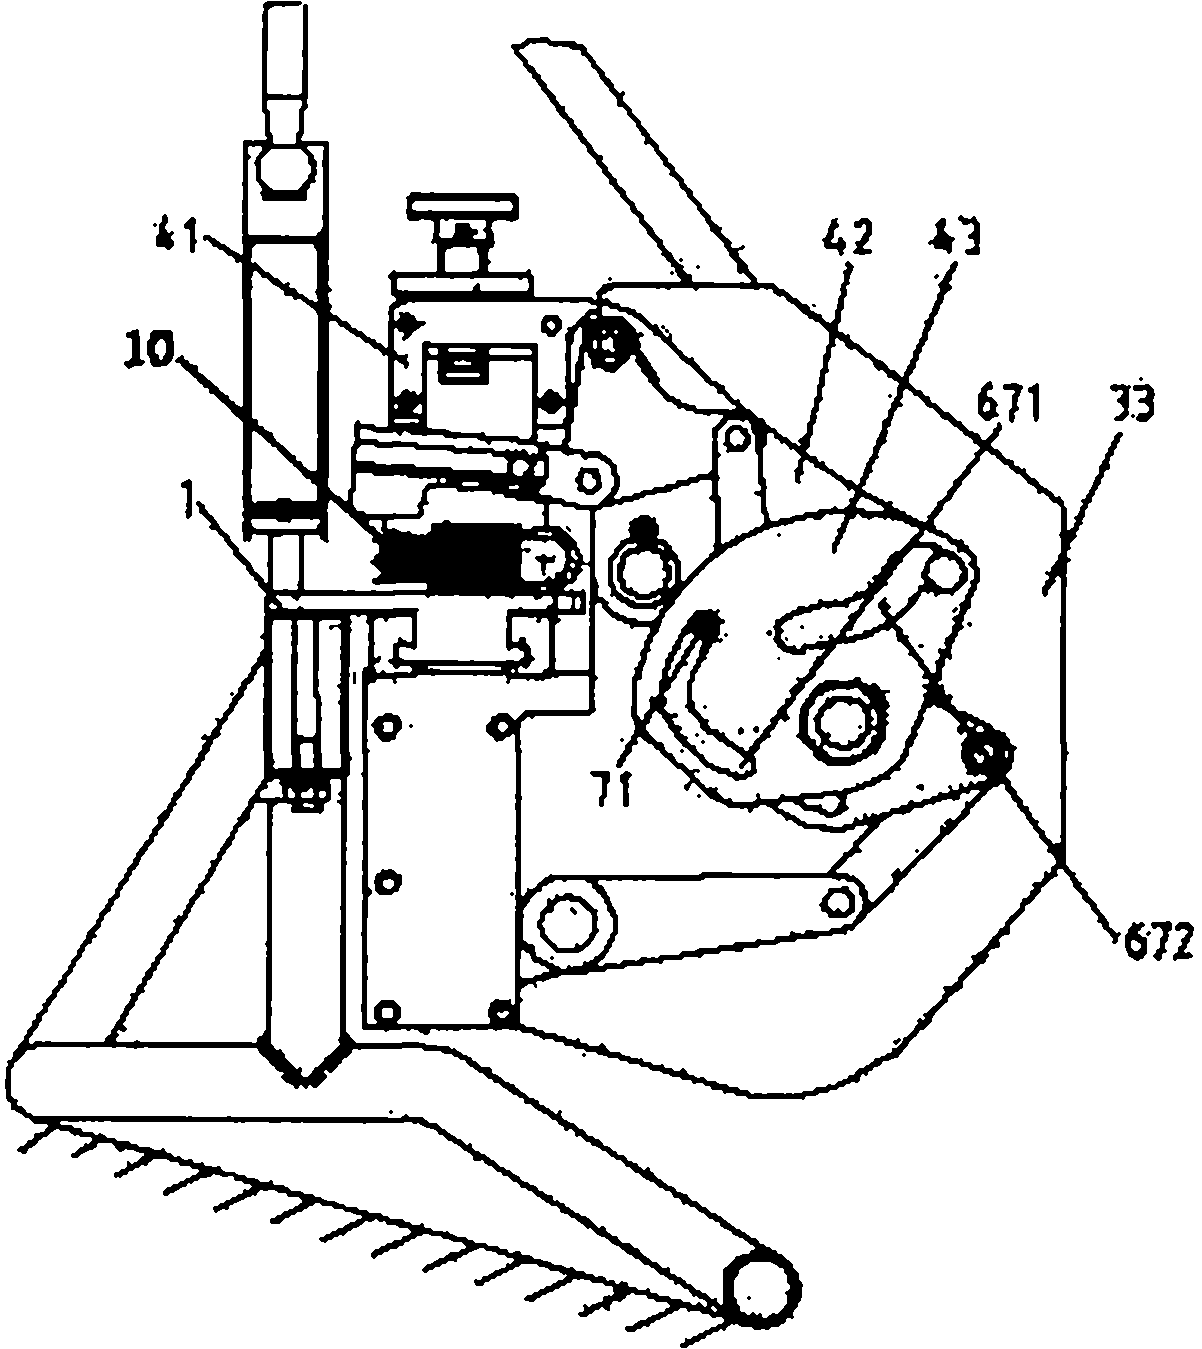 Mechanical button sewing machine